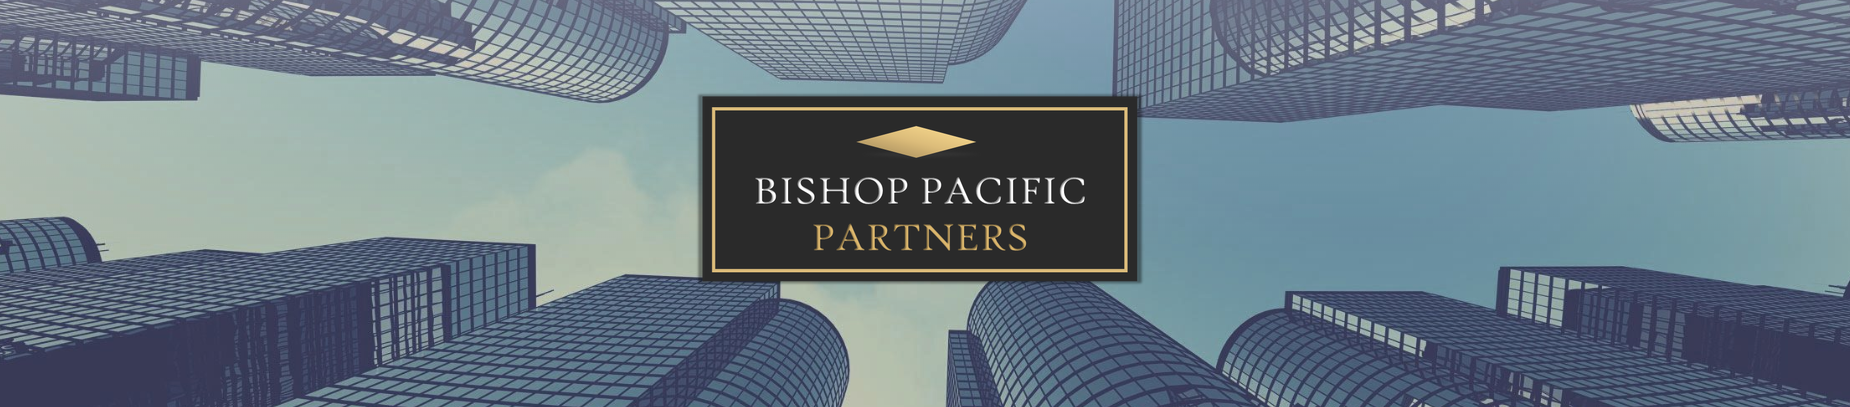 Bishop Pacific Partners